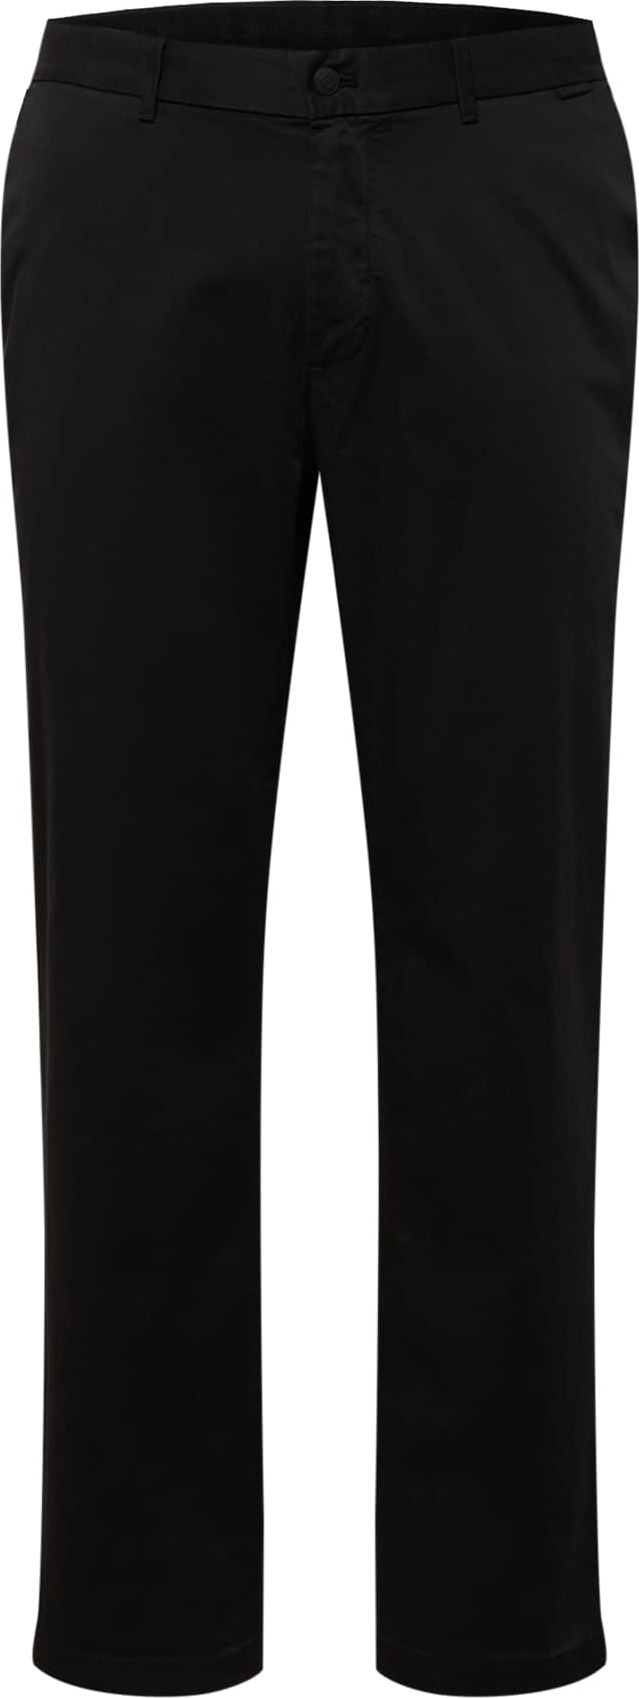 Calvin Klein Big & Tall Chino kalhoty černá